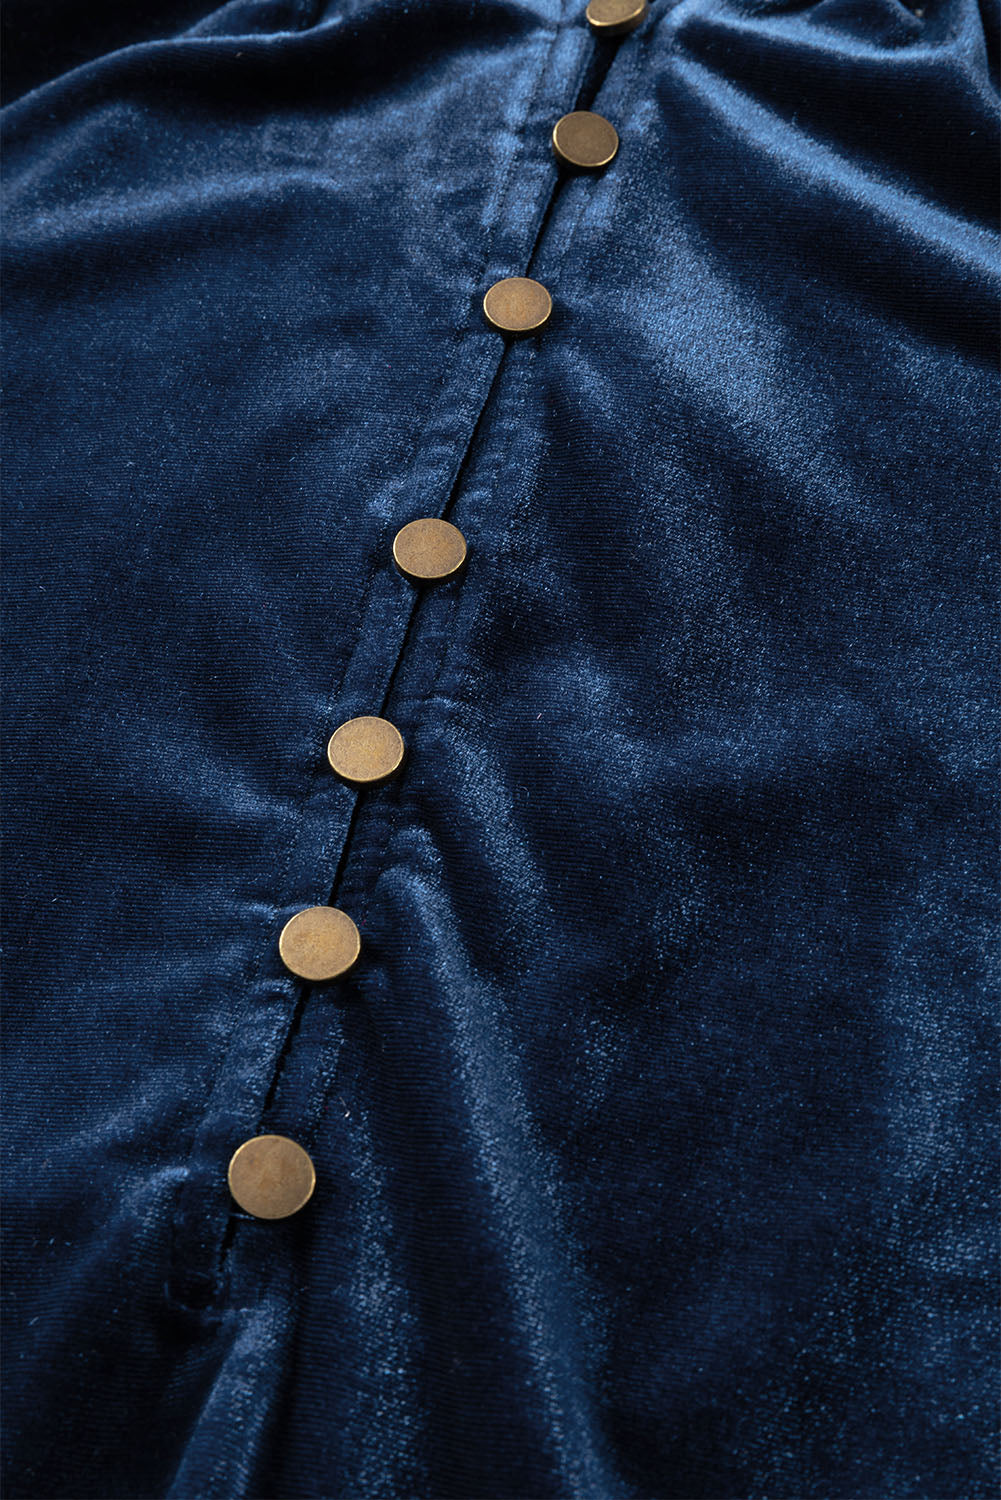 Navy Blue Frilled Neck Buttoned Front Velvet Top